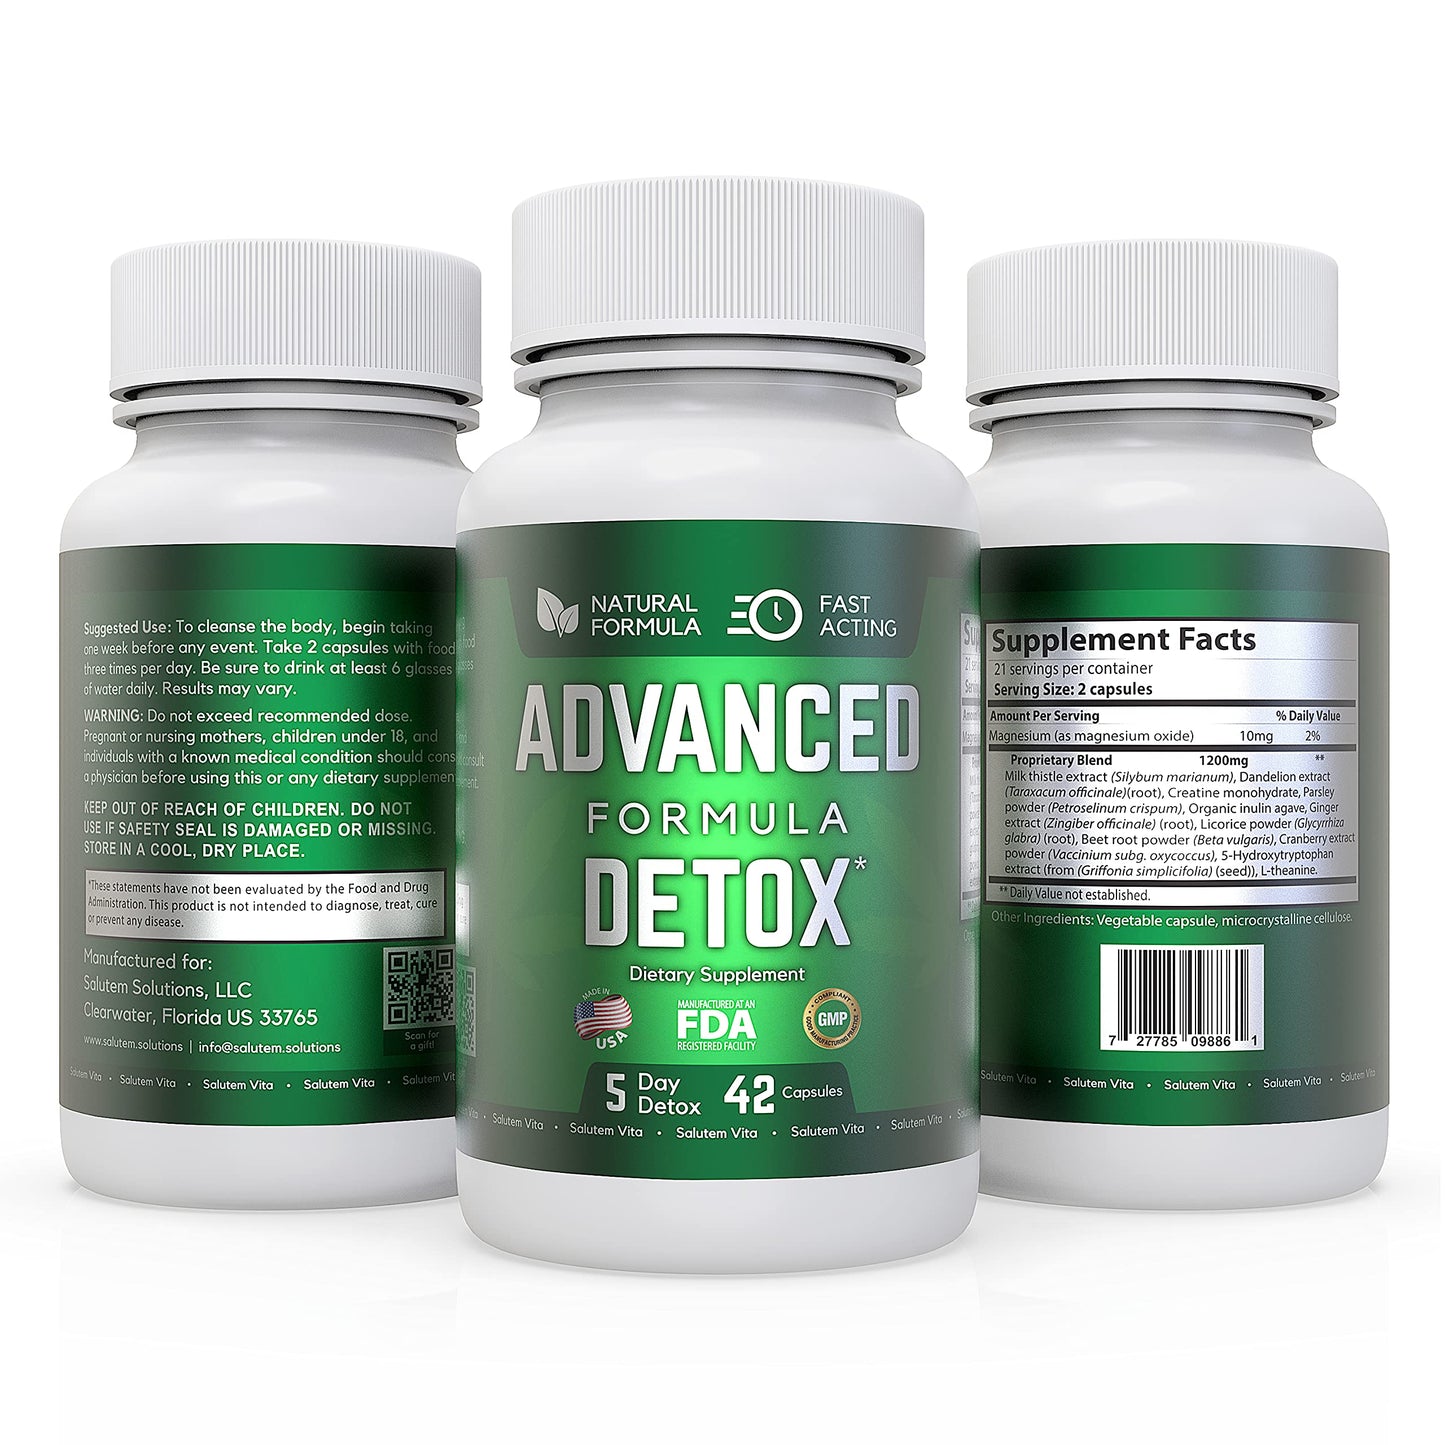 Salutem Vita Advance Formula Detox - Supplement for Toxin Removal